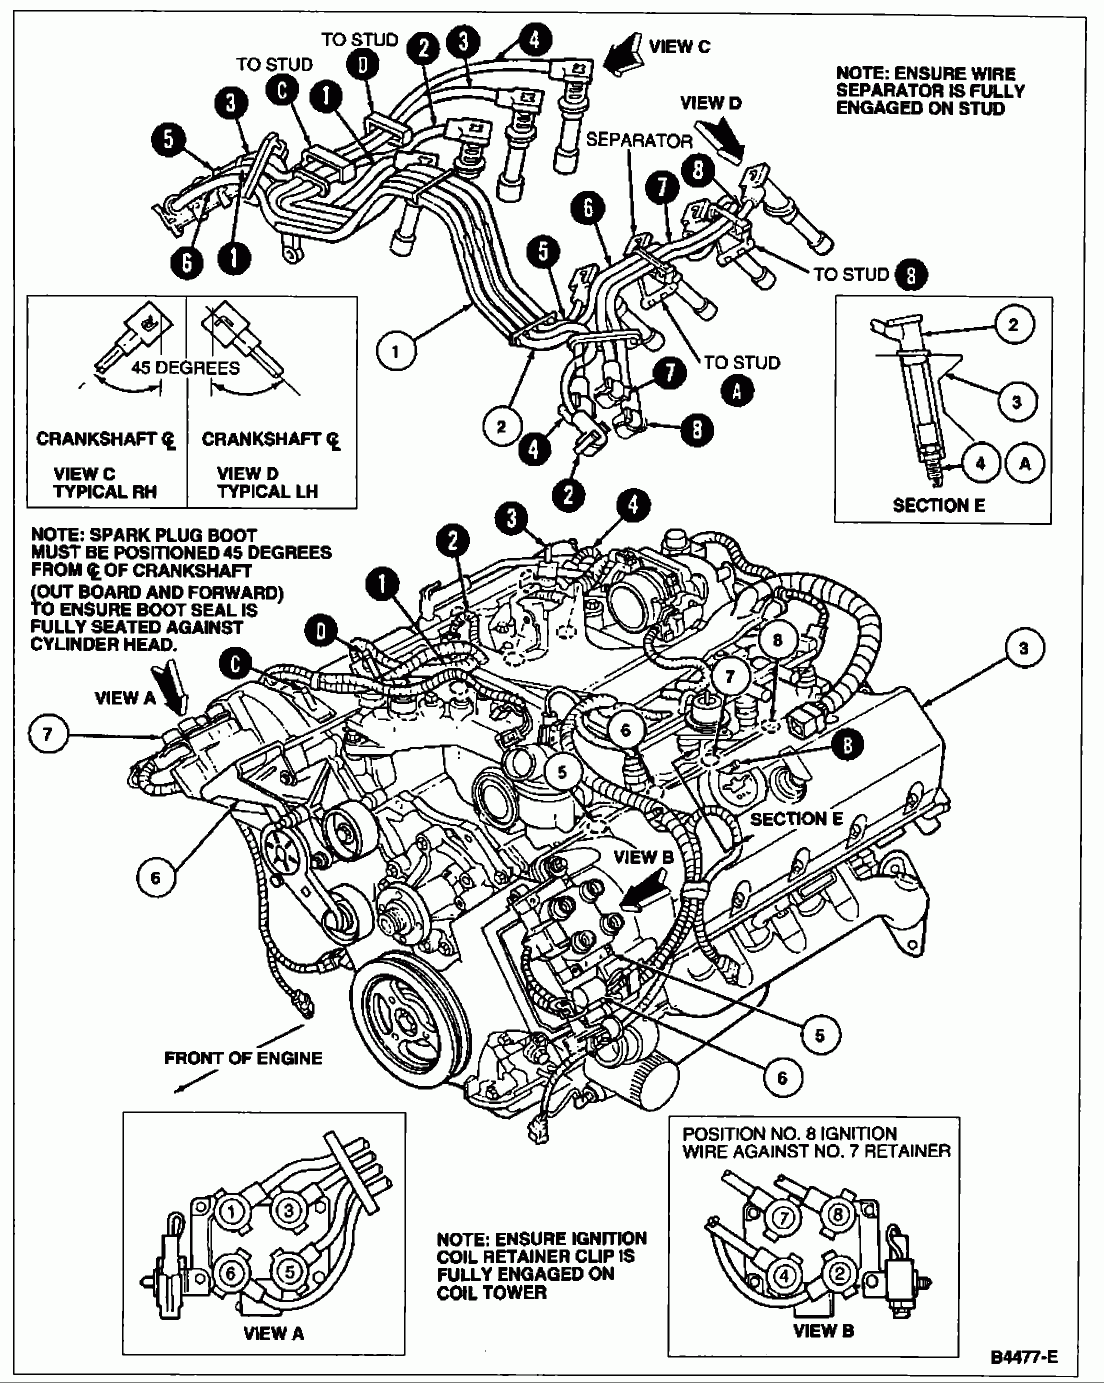 Bz_1985] Ford Explorer Engine Diagram 96 Ford F 150 Ford